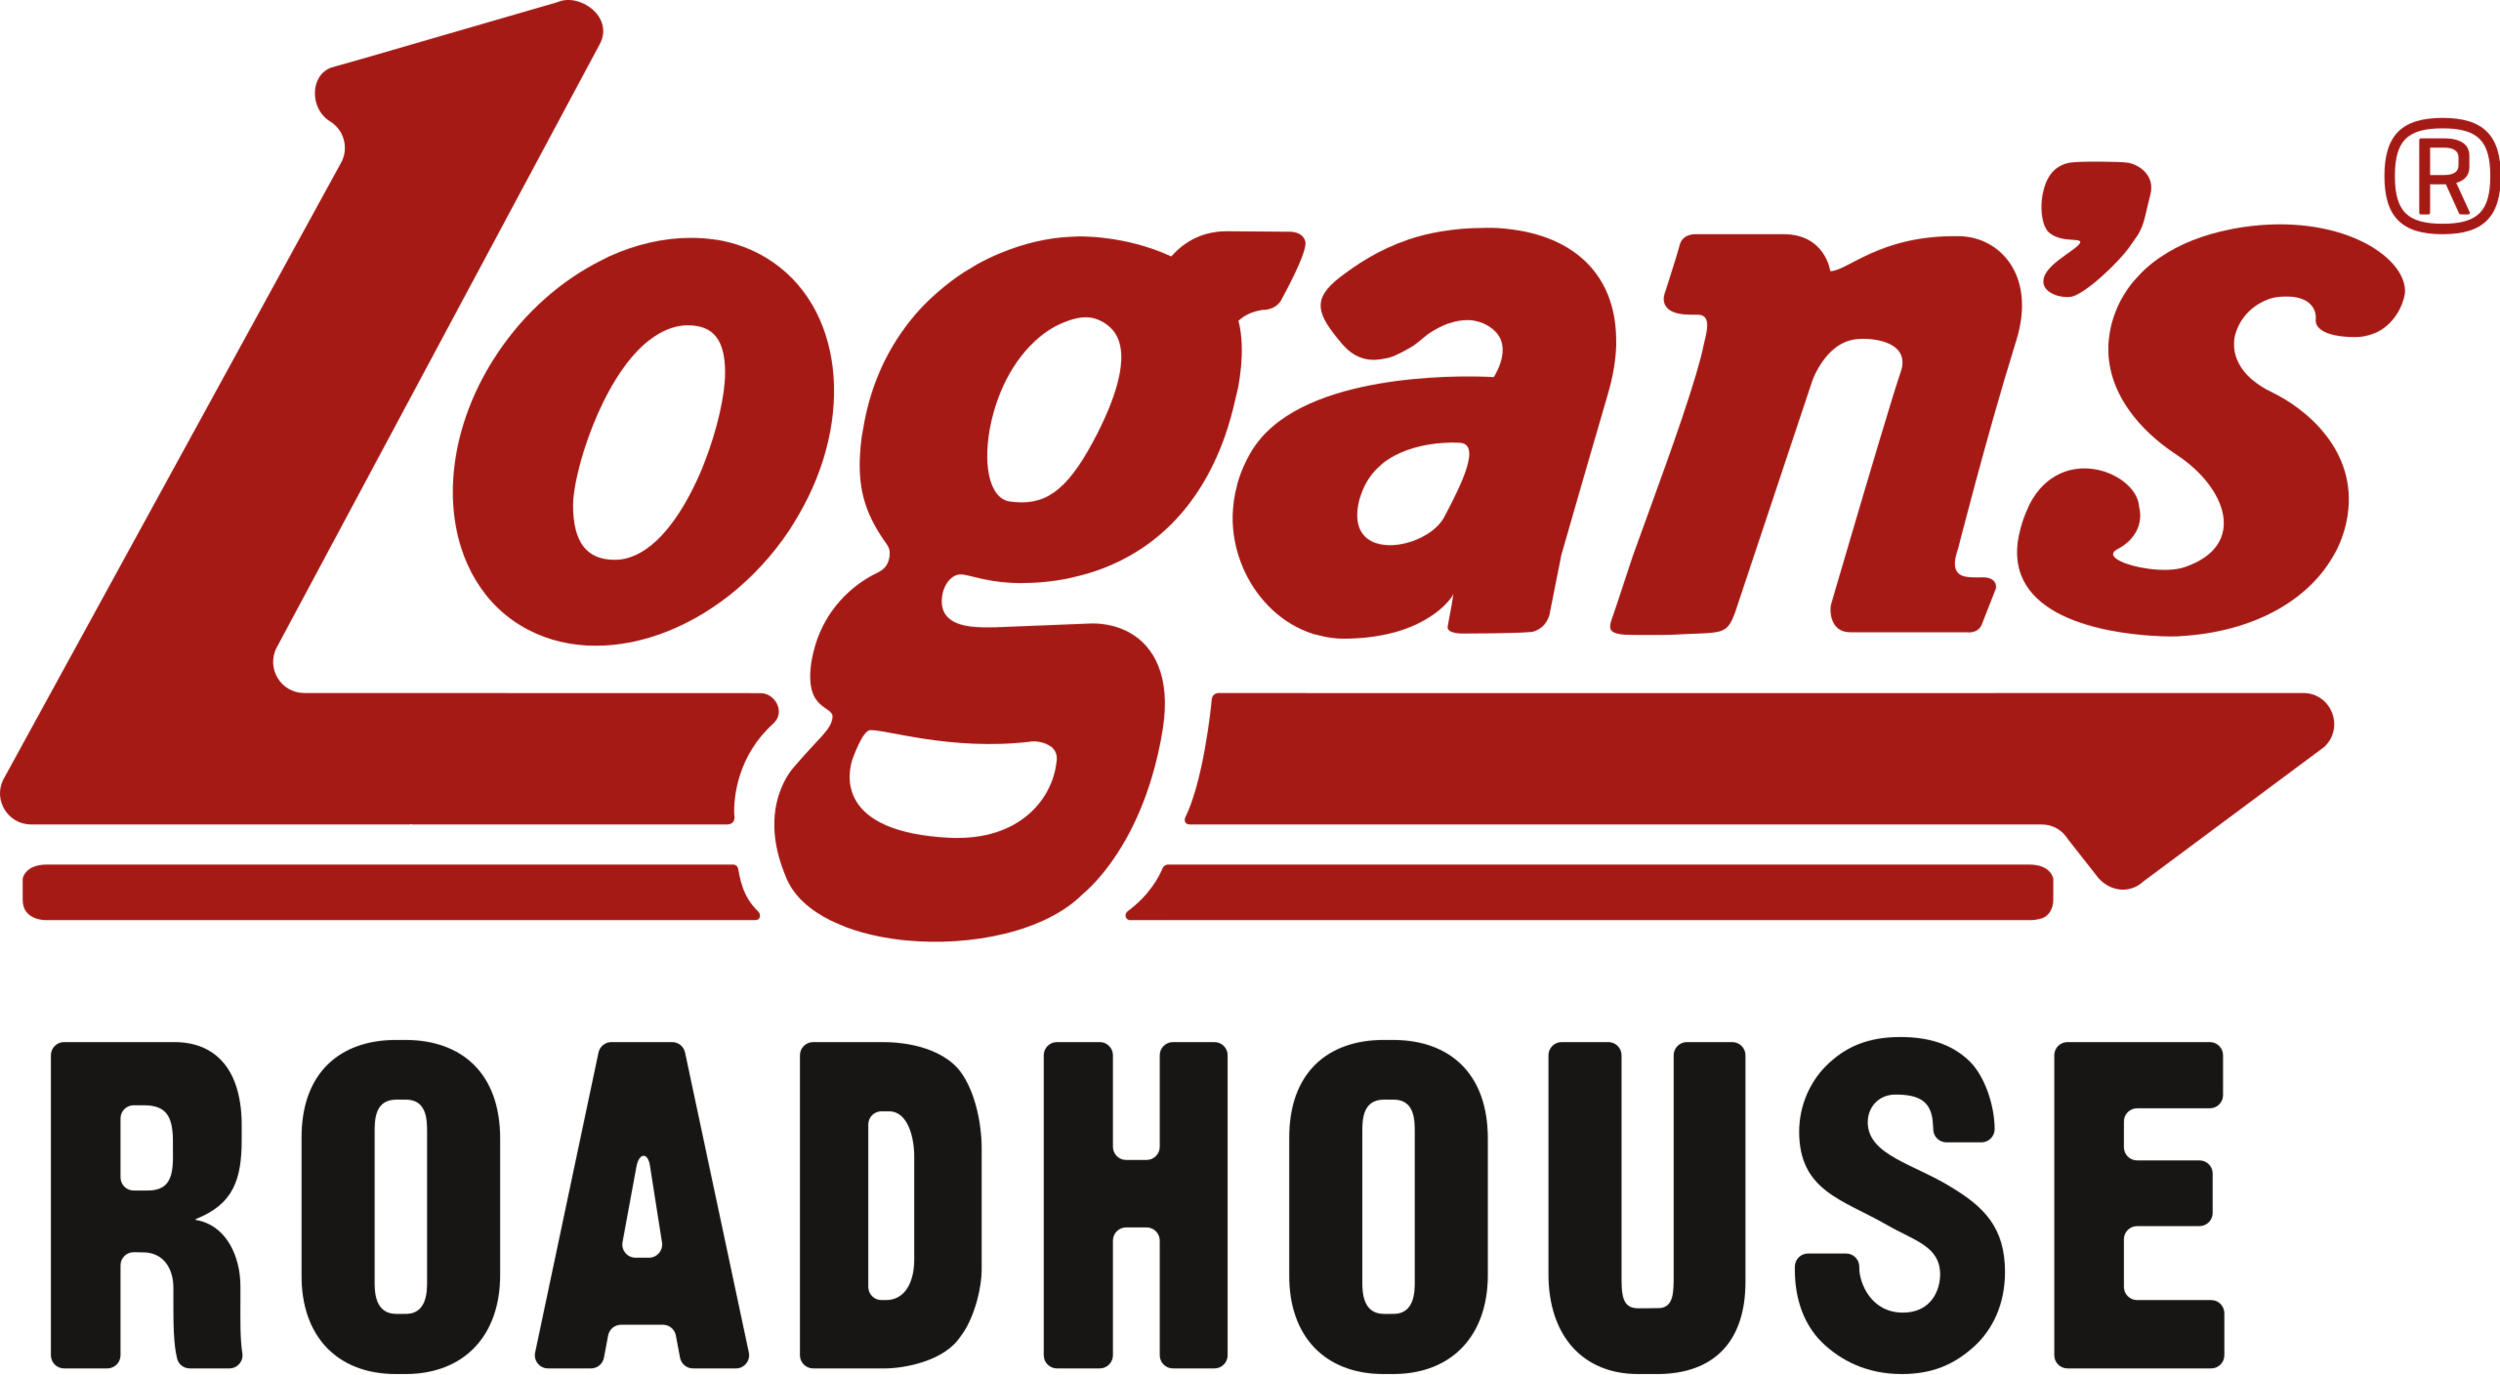 Logan's_Roadhouse.svg.png